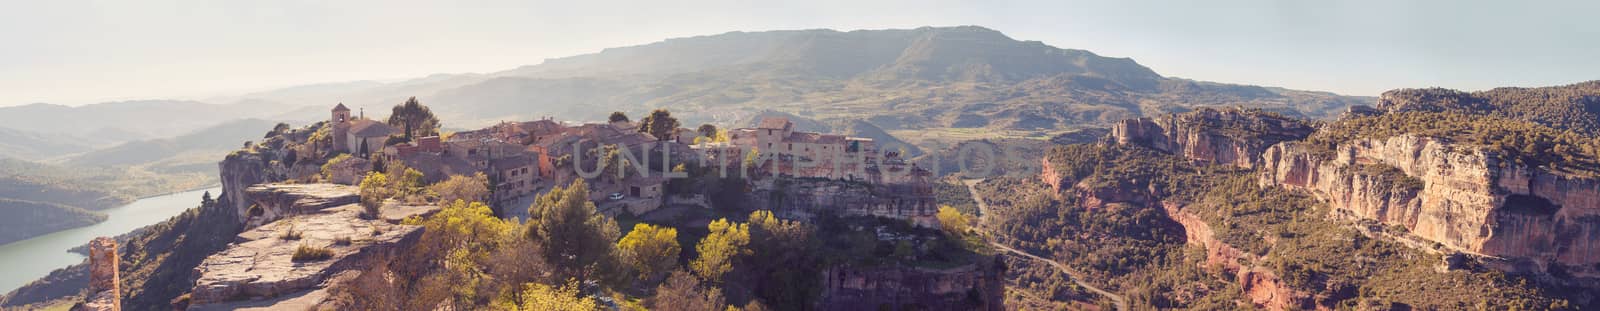 Siurana village in the province of Tarragona by photobac